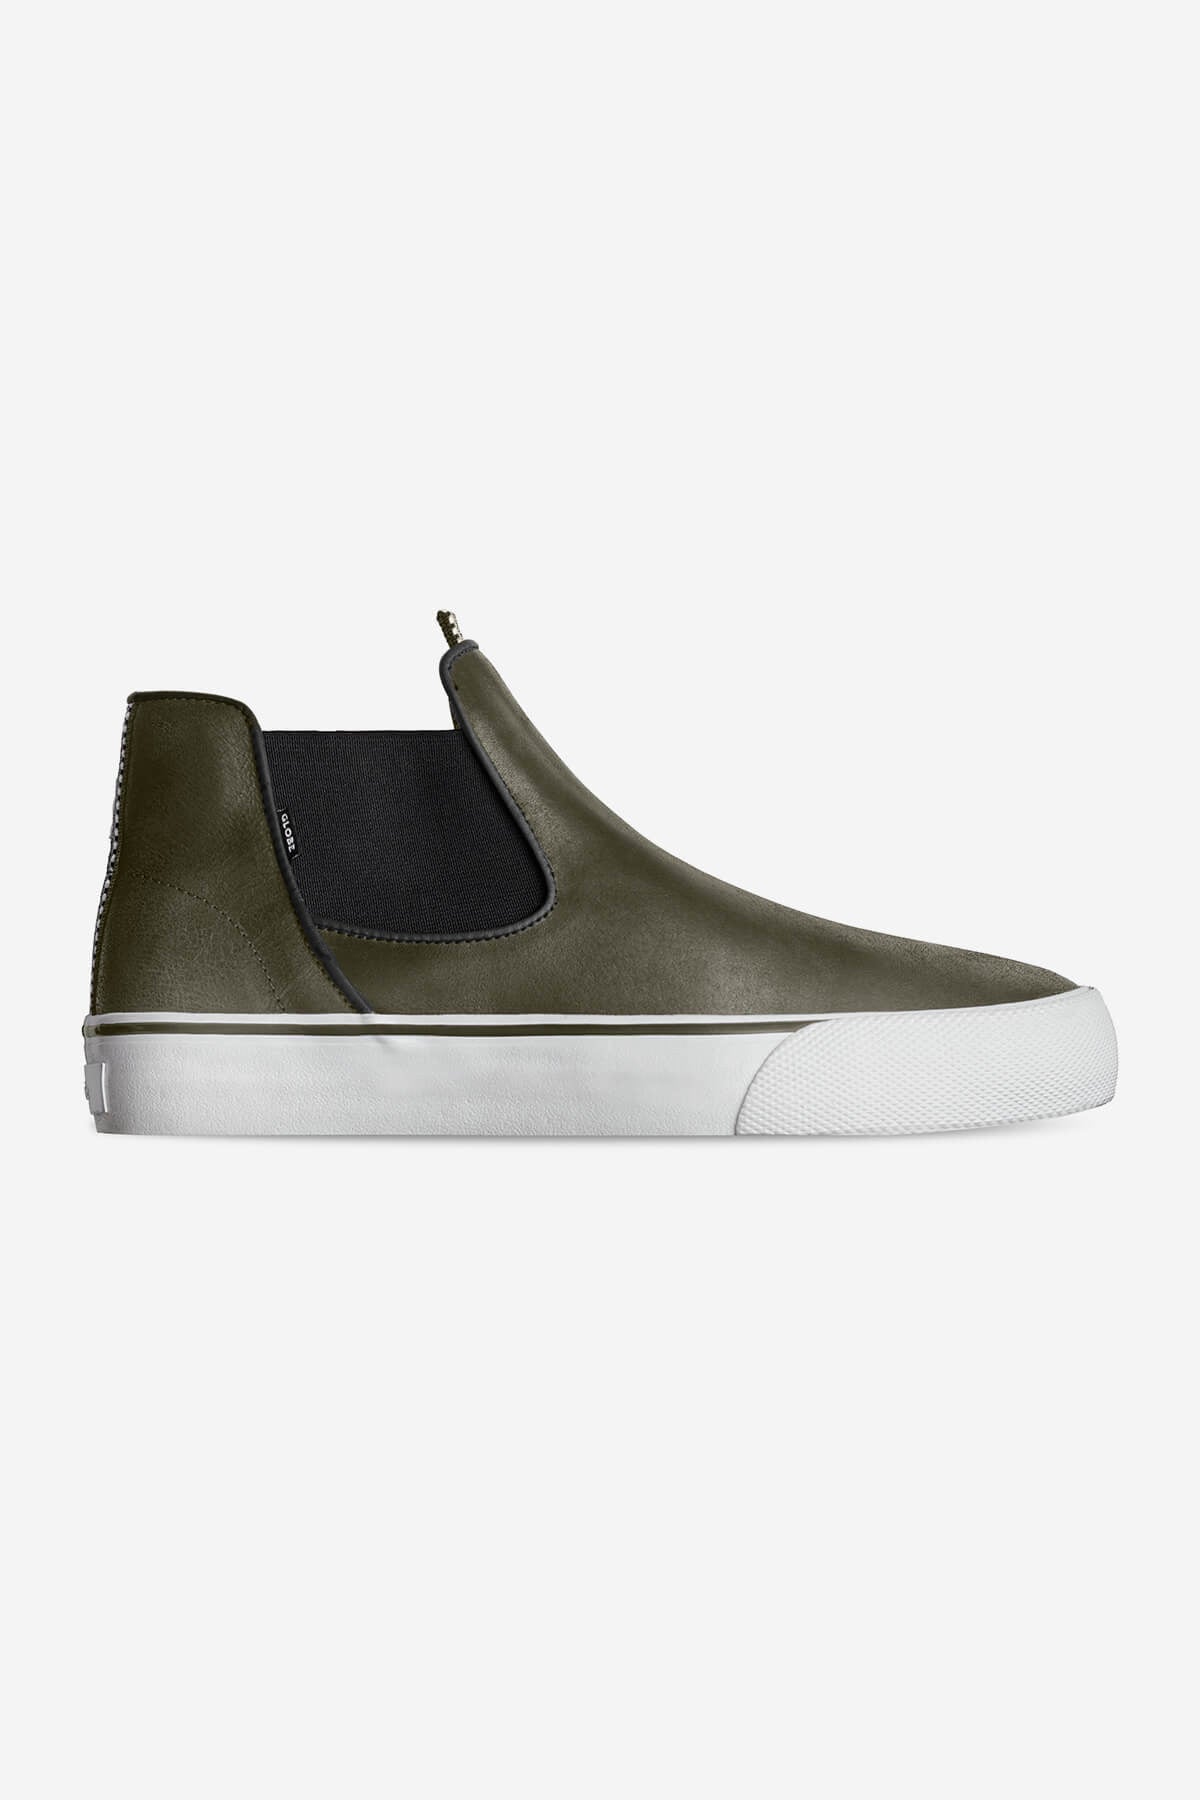 Globe - Dover - Olive/Gillette - skateboard Sapatos